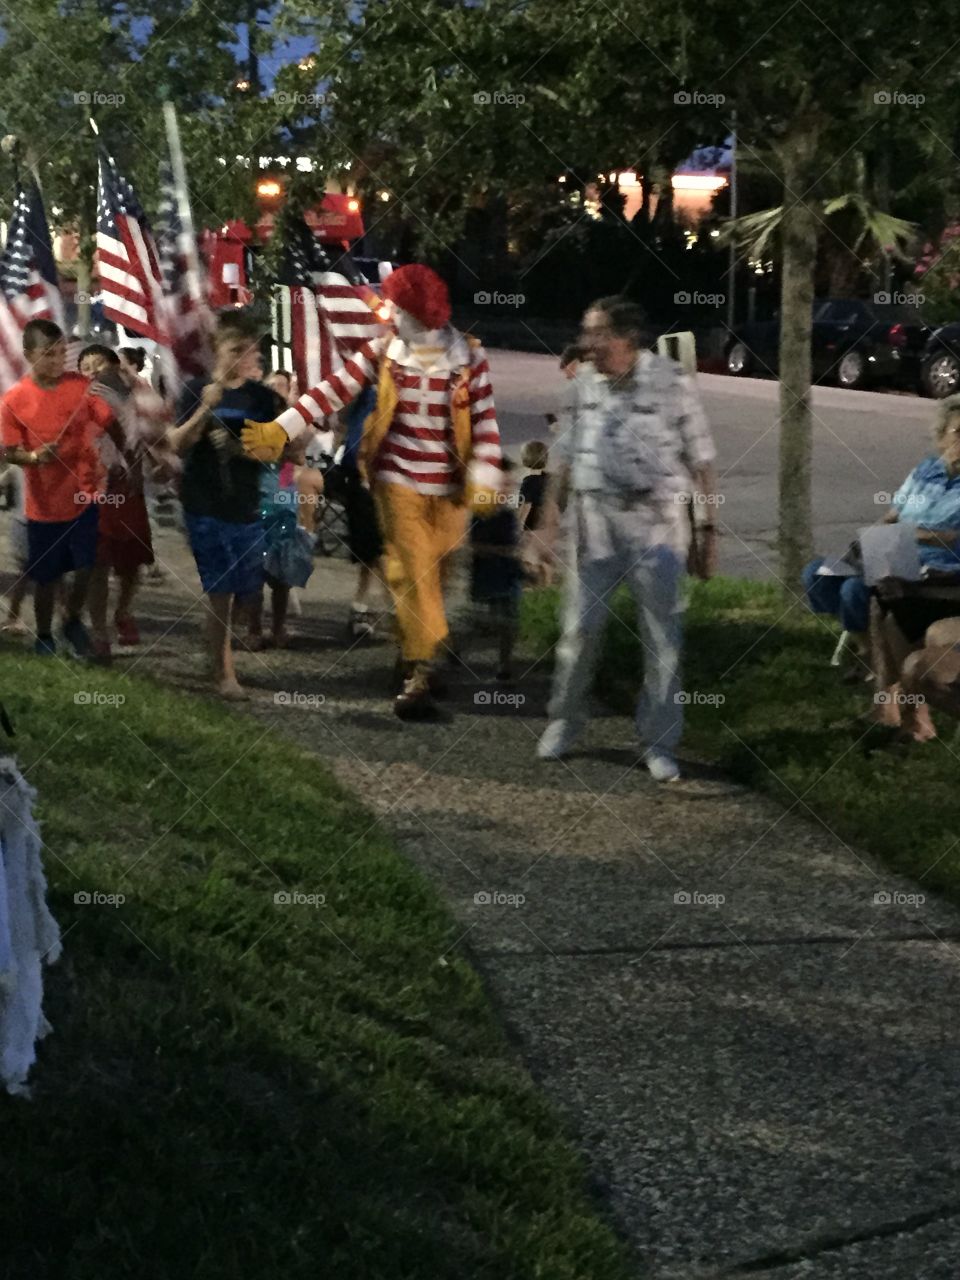 Ronald McDonald leading the flag parade 